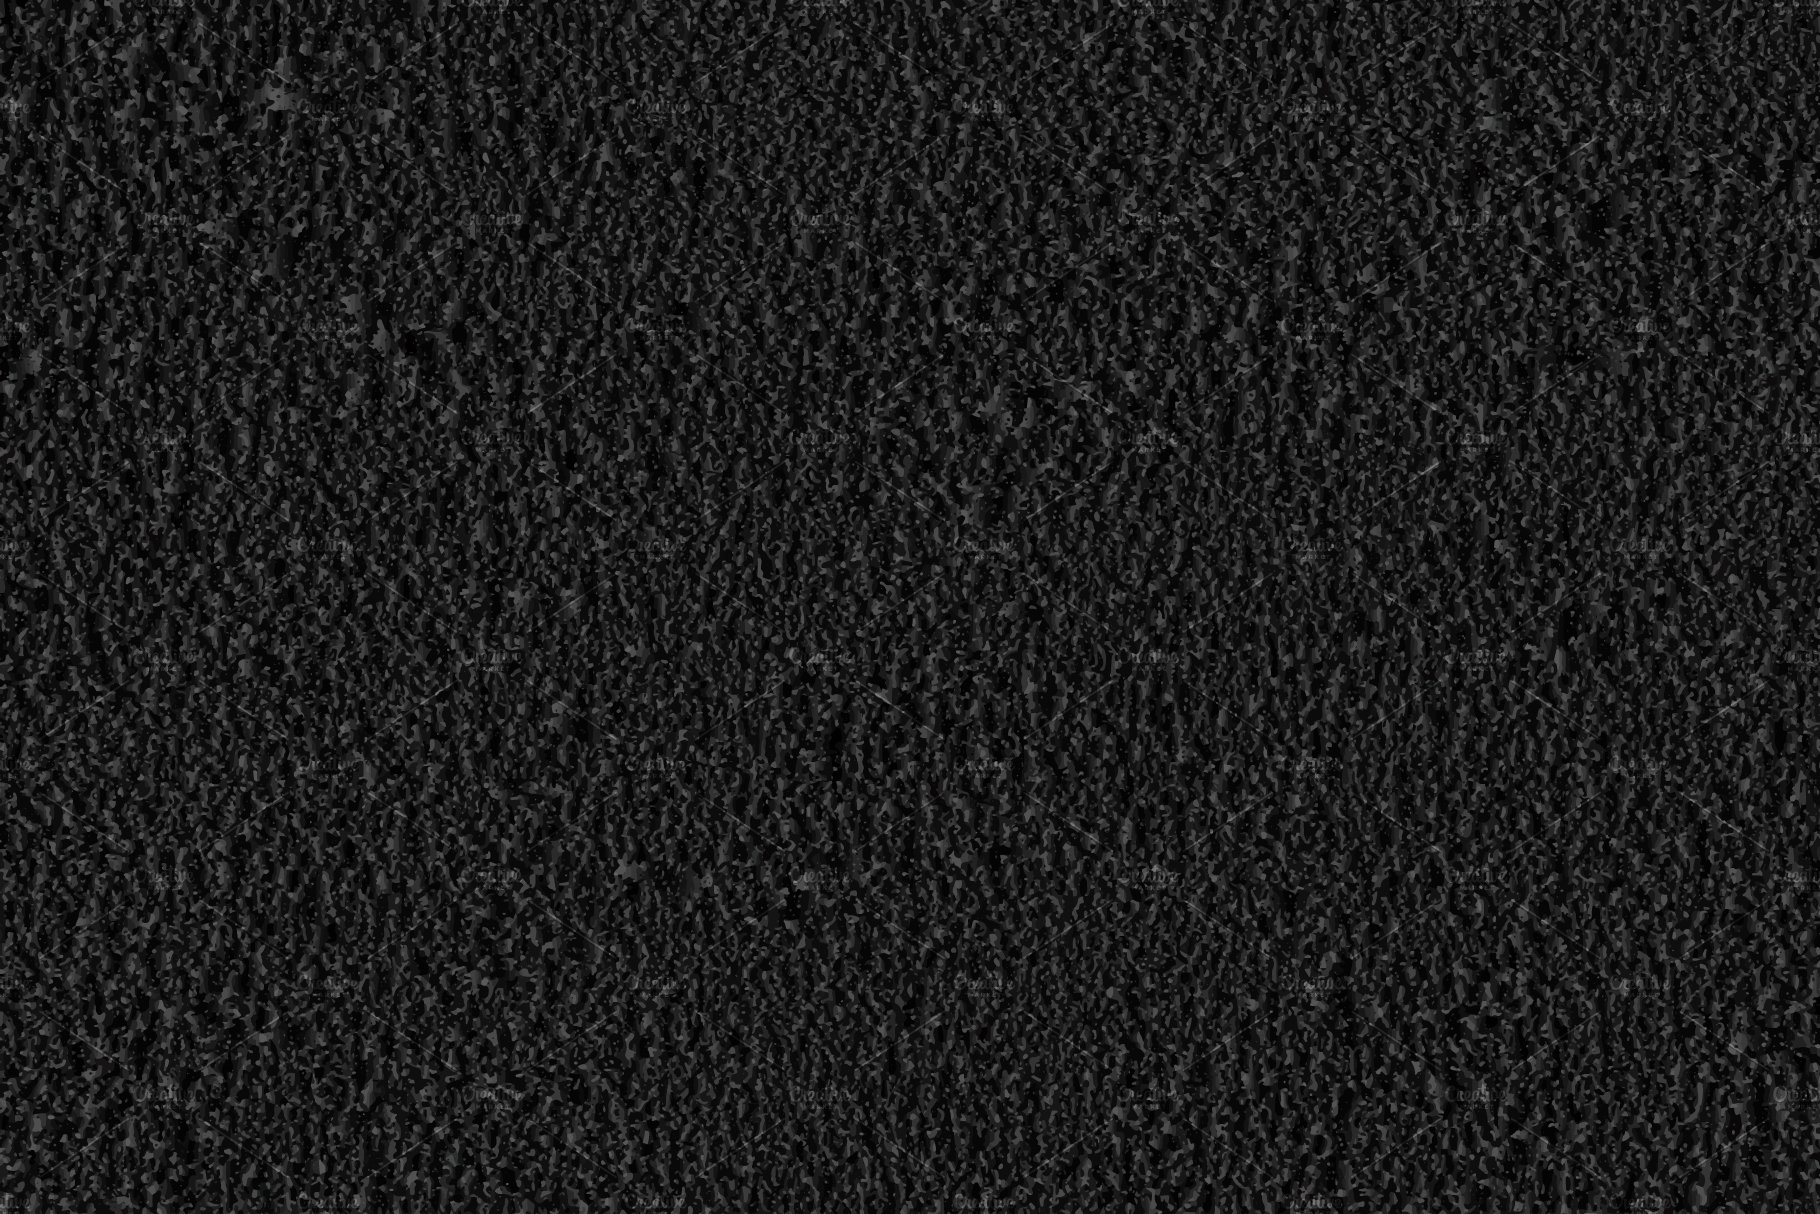 Dark Black Textured Background preview image.